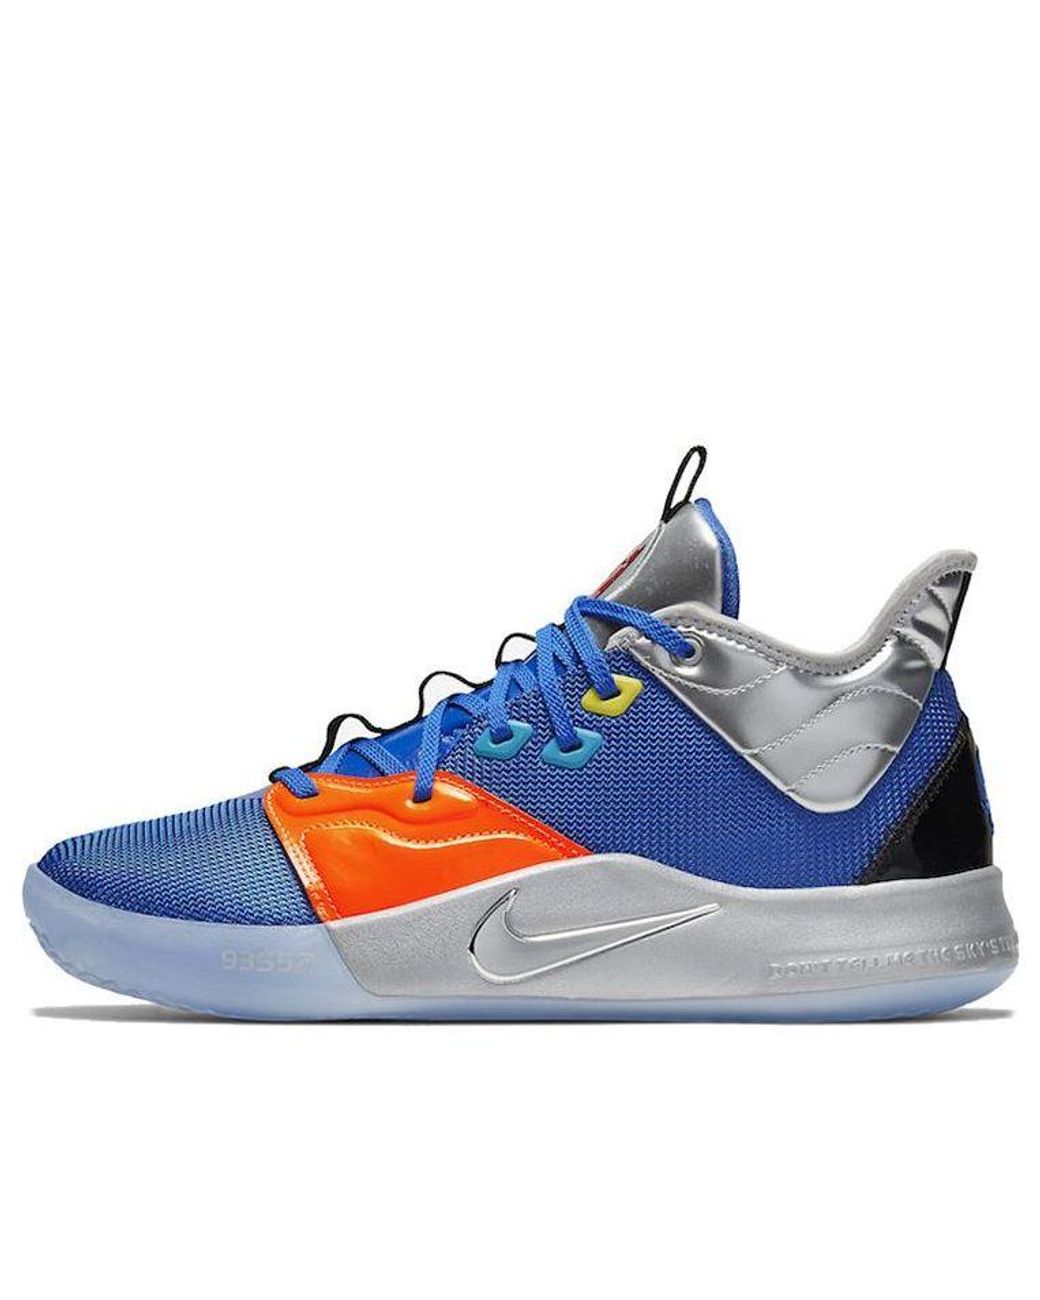 Nike Nasa X Pg 3 Ep 'clipper Blue' for